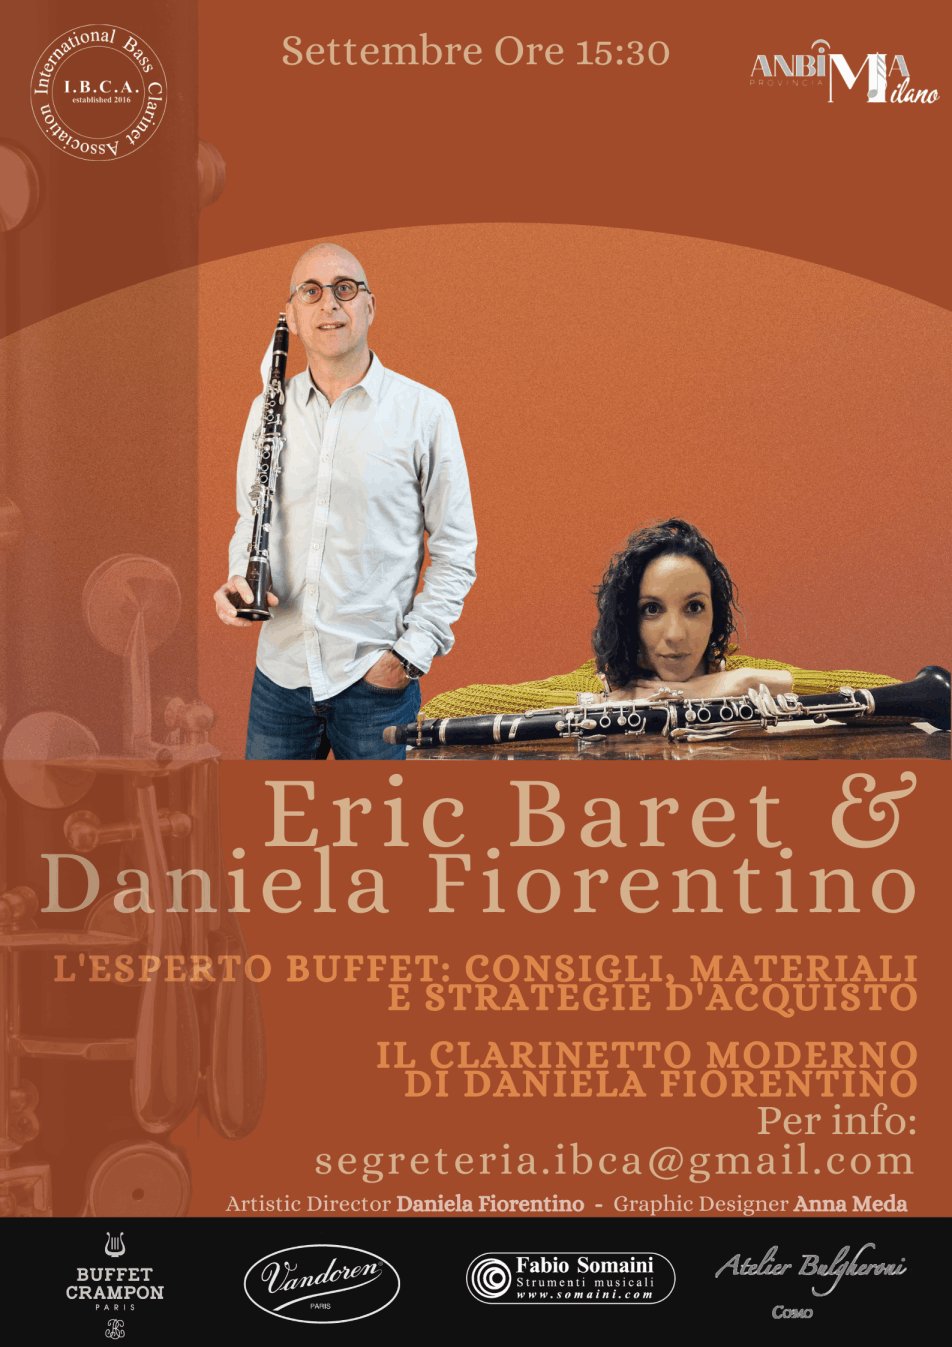 Eric Baret e Daniela Fiorentino